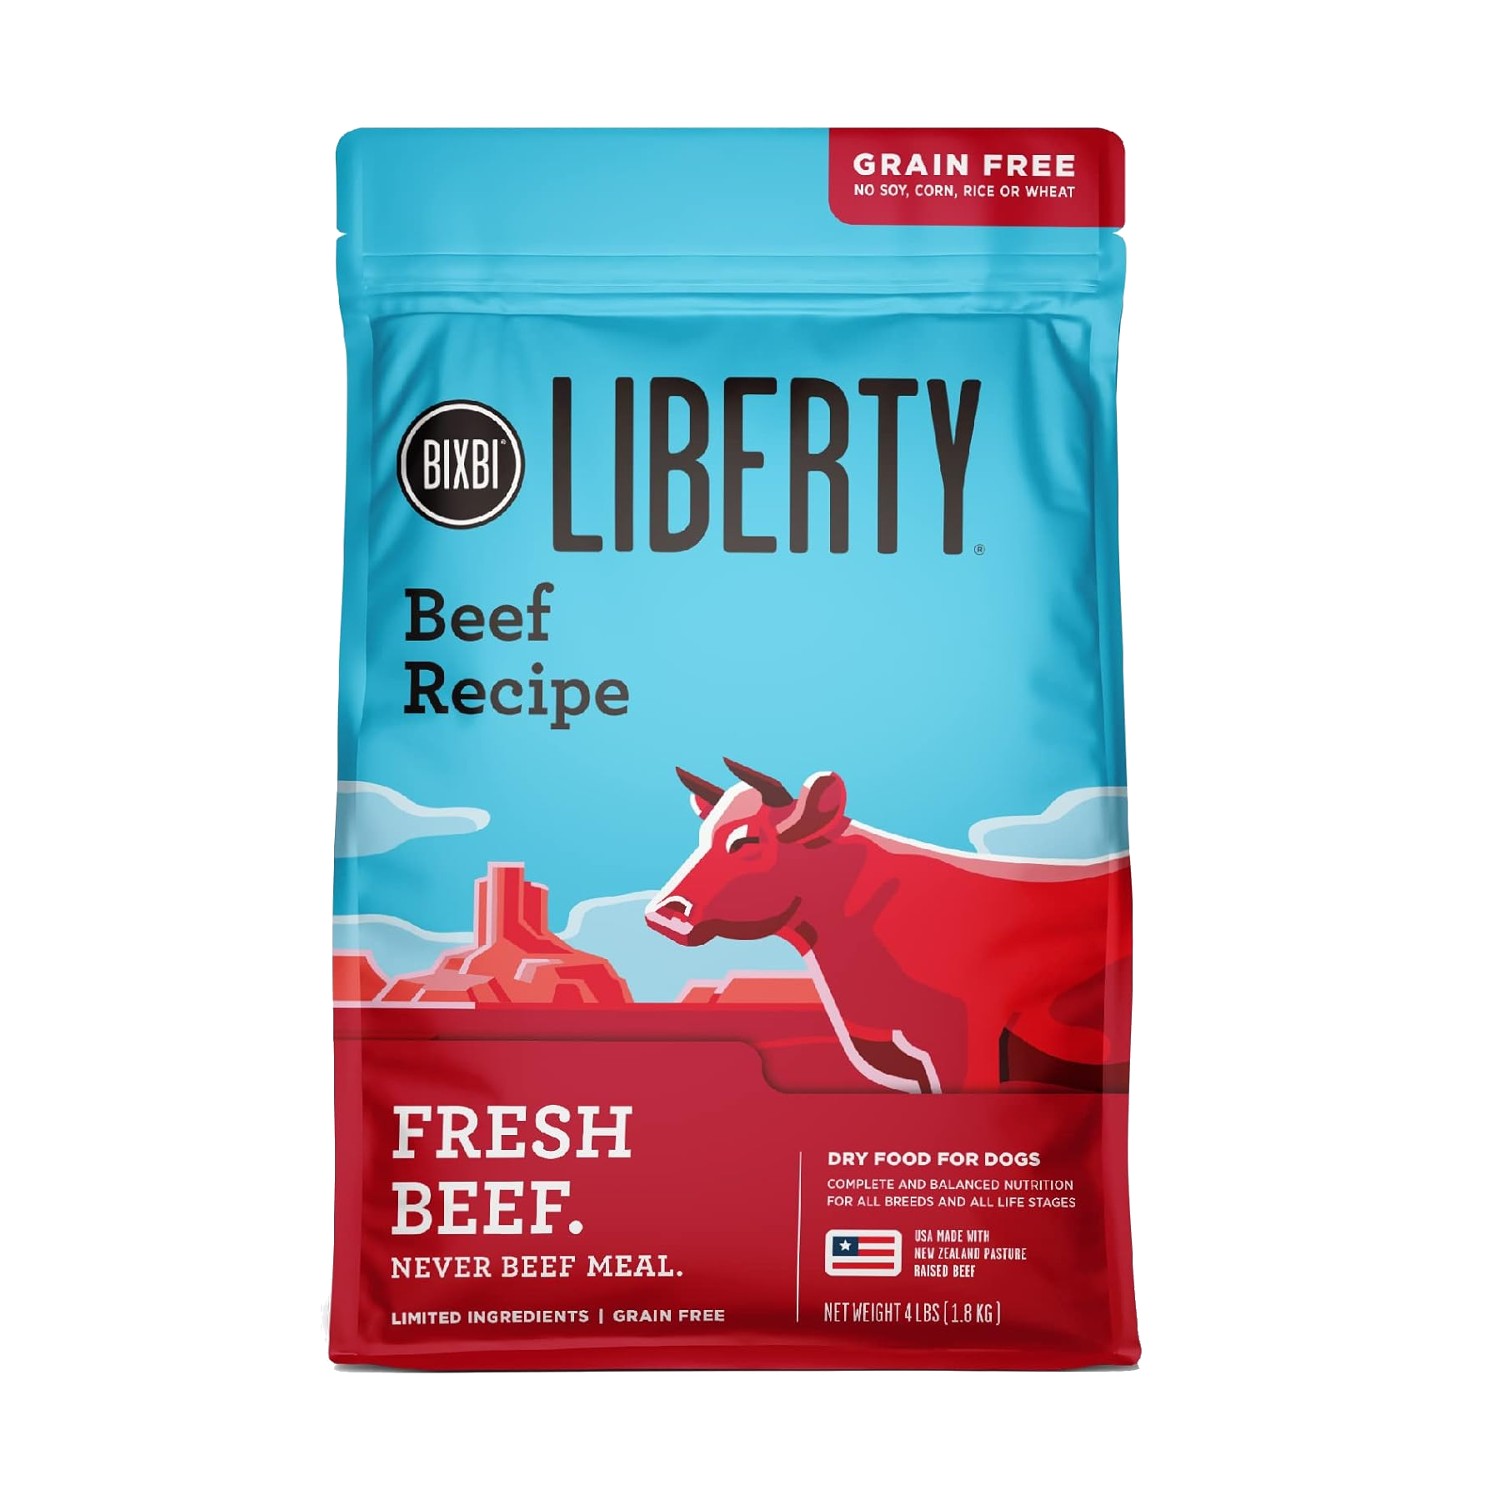 bixbi-liberty-grain-free-dry-dog-food-beef-recipe